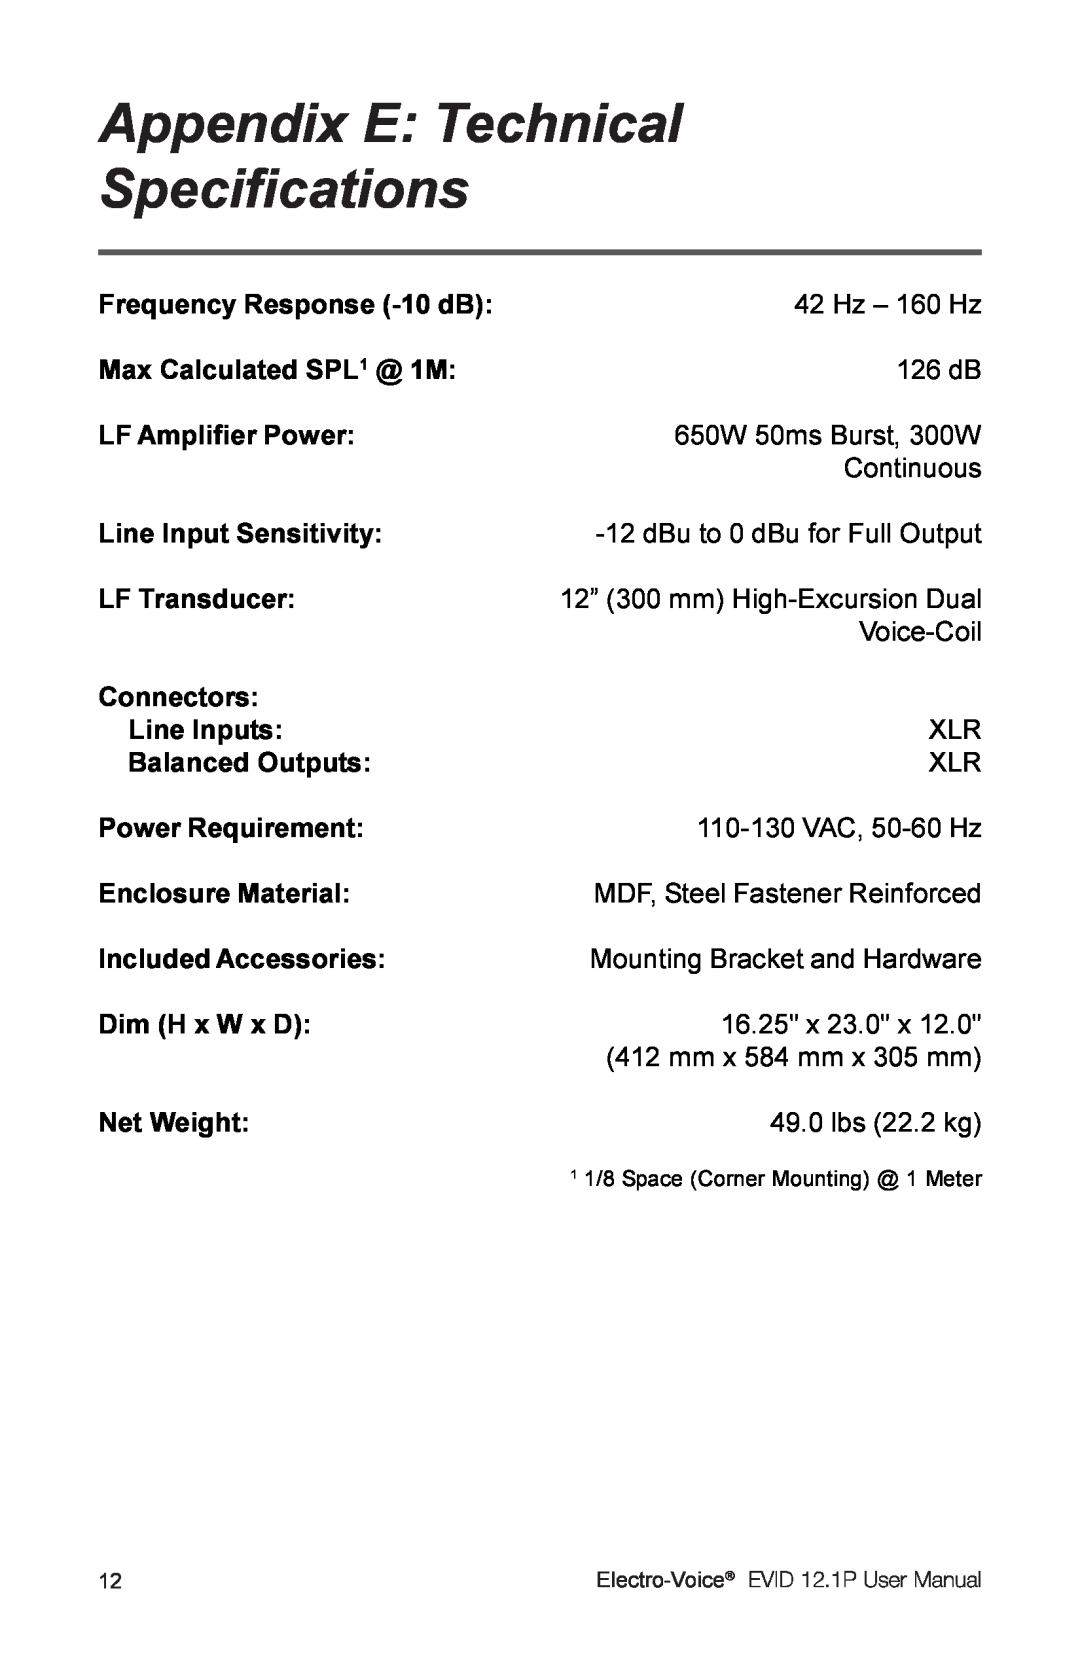 Electro-Voice 2.1P user manual Appendix E Technical Specifications 